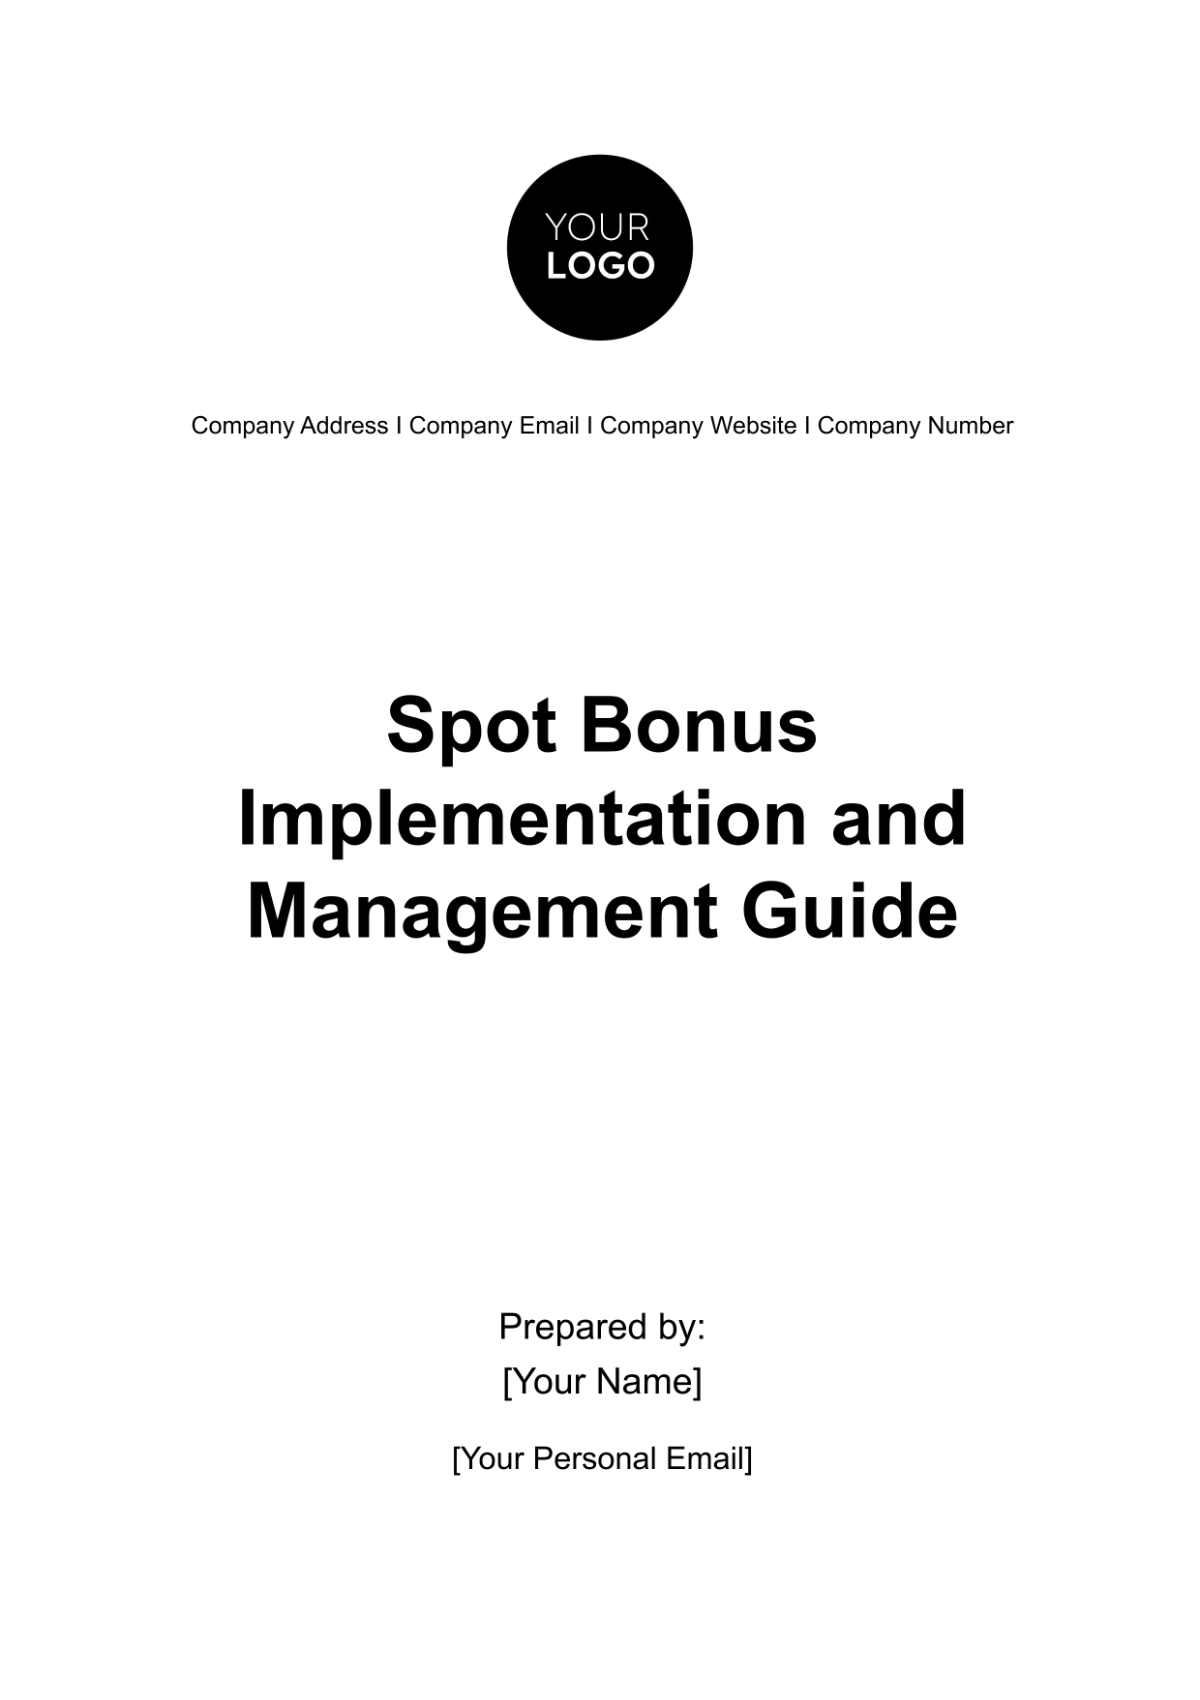 Free Spot Bonus Implementation and Management Guide HR Template